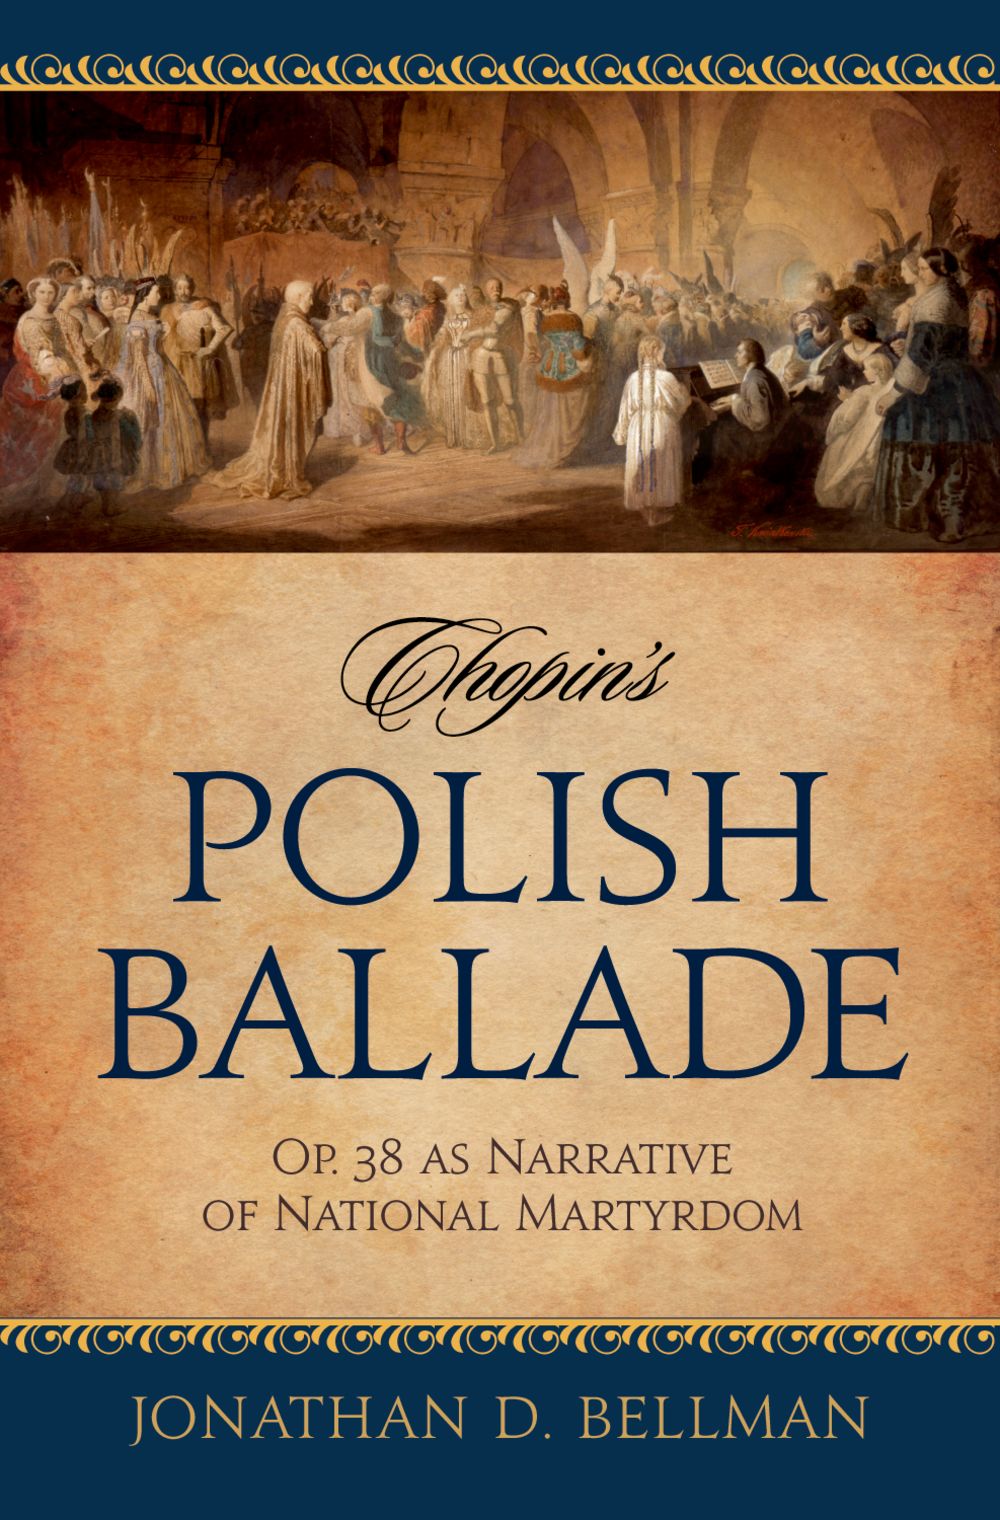 Chopin's Polish Ballade Op. 38: Reference